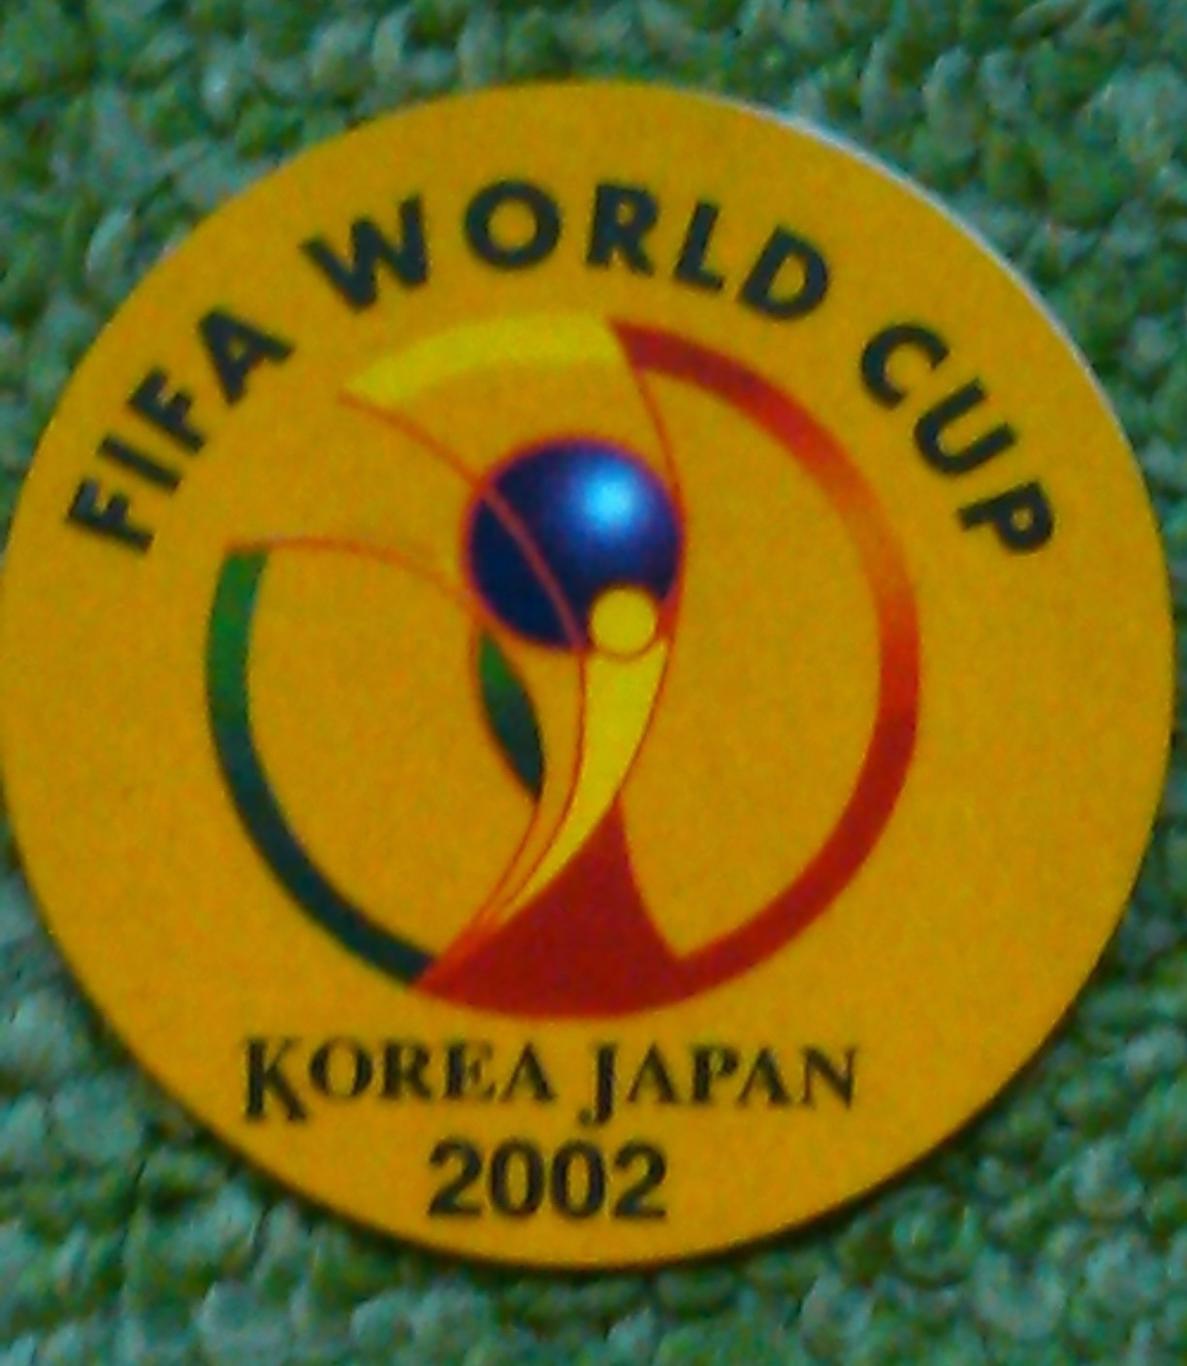 жетон Мехмет Шоль. Германия. FIFA WORLD CUP 2002. Оптом скидки до 45%! 1